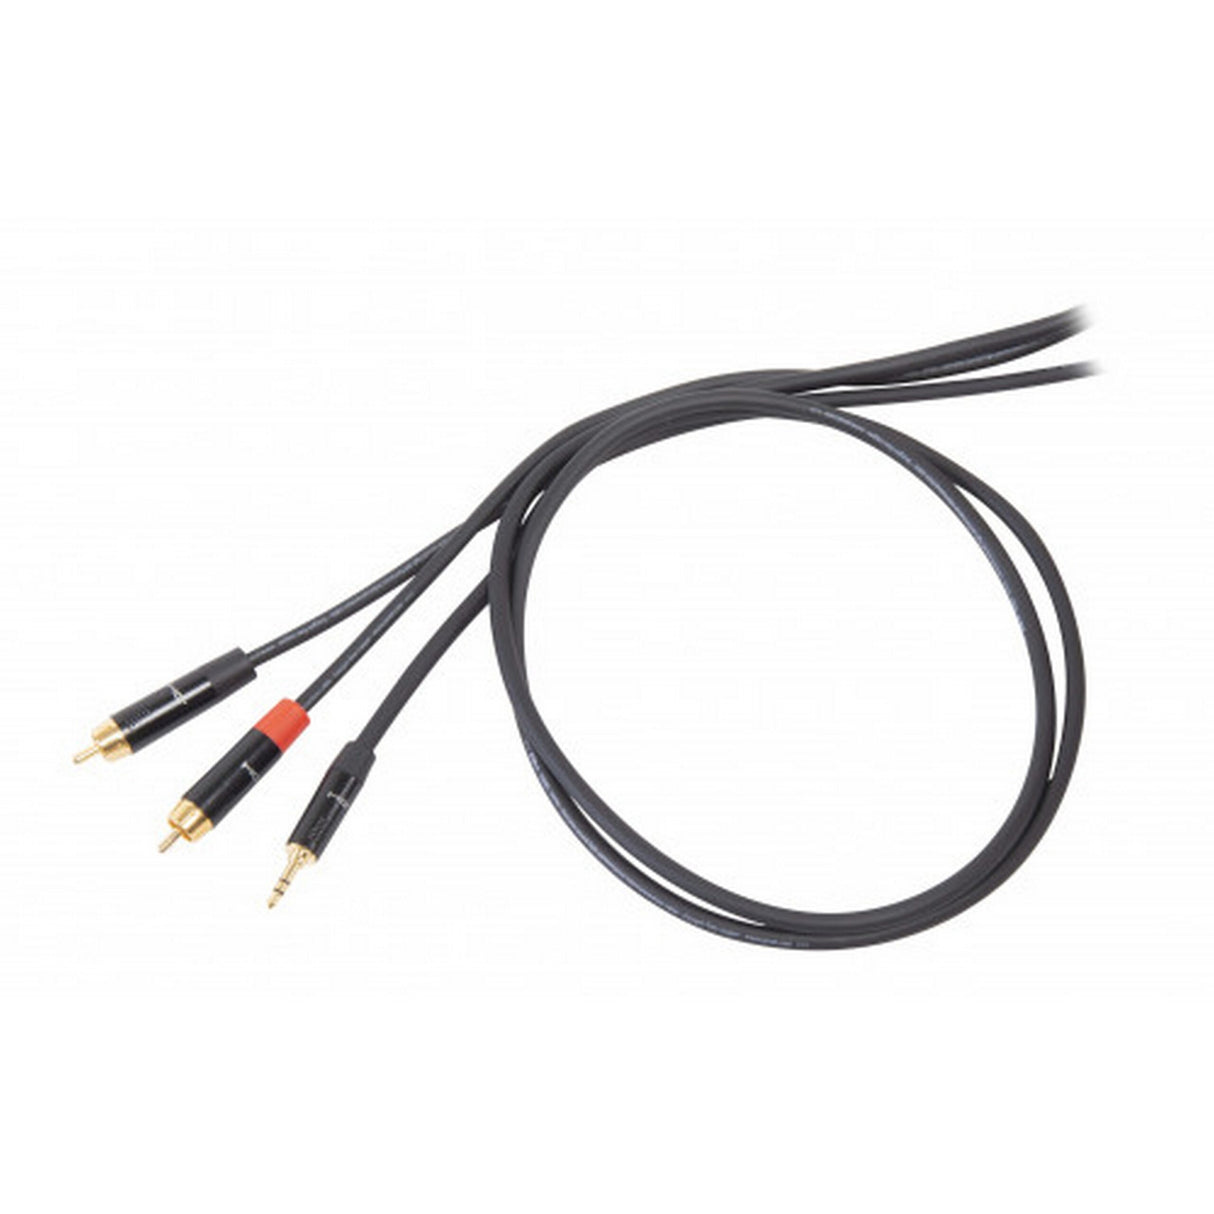 DieHard DHS520LU3 ONEHERO Professional Insert Cable, 3 m